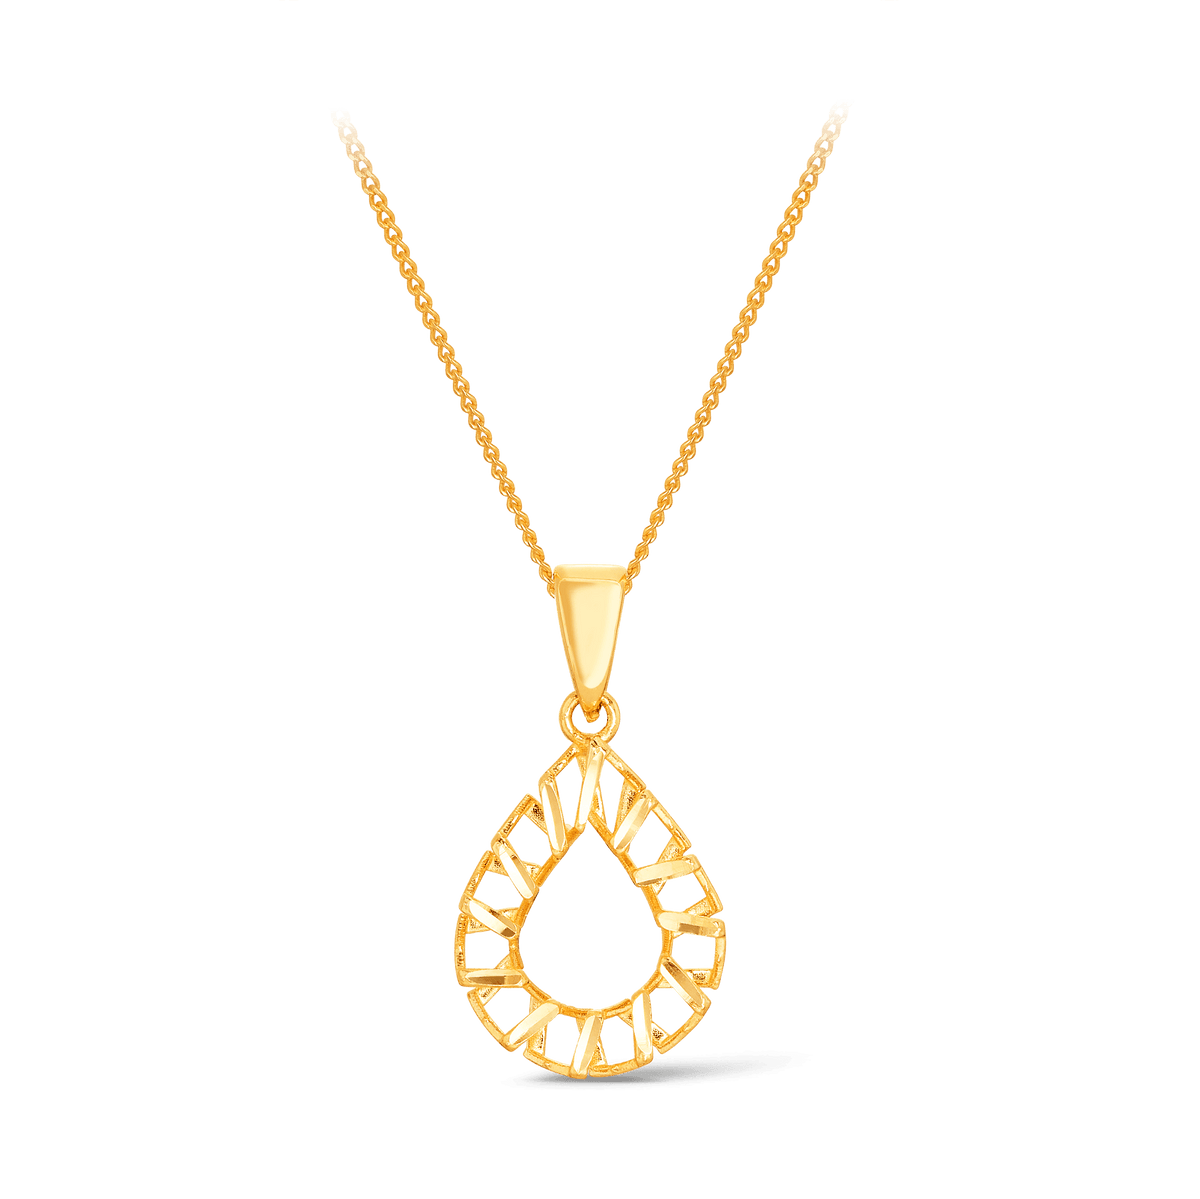 Diamond Cut Open Pear Shape Pendant in 9ct Yellow Gold - Wallace Bishop